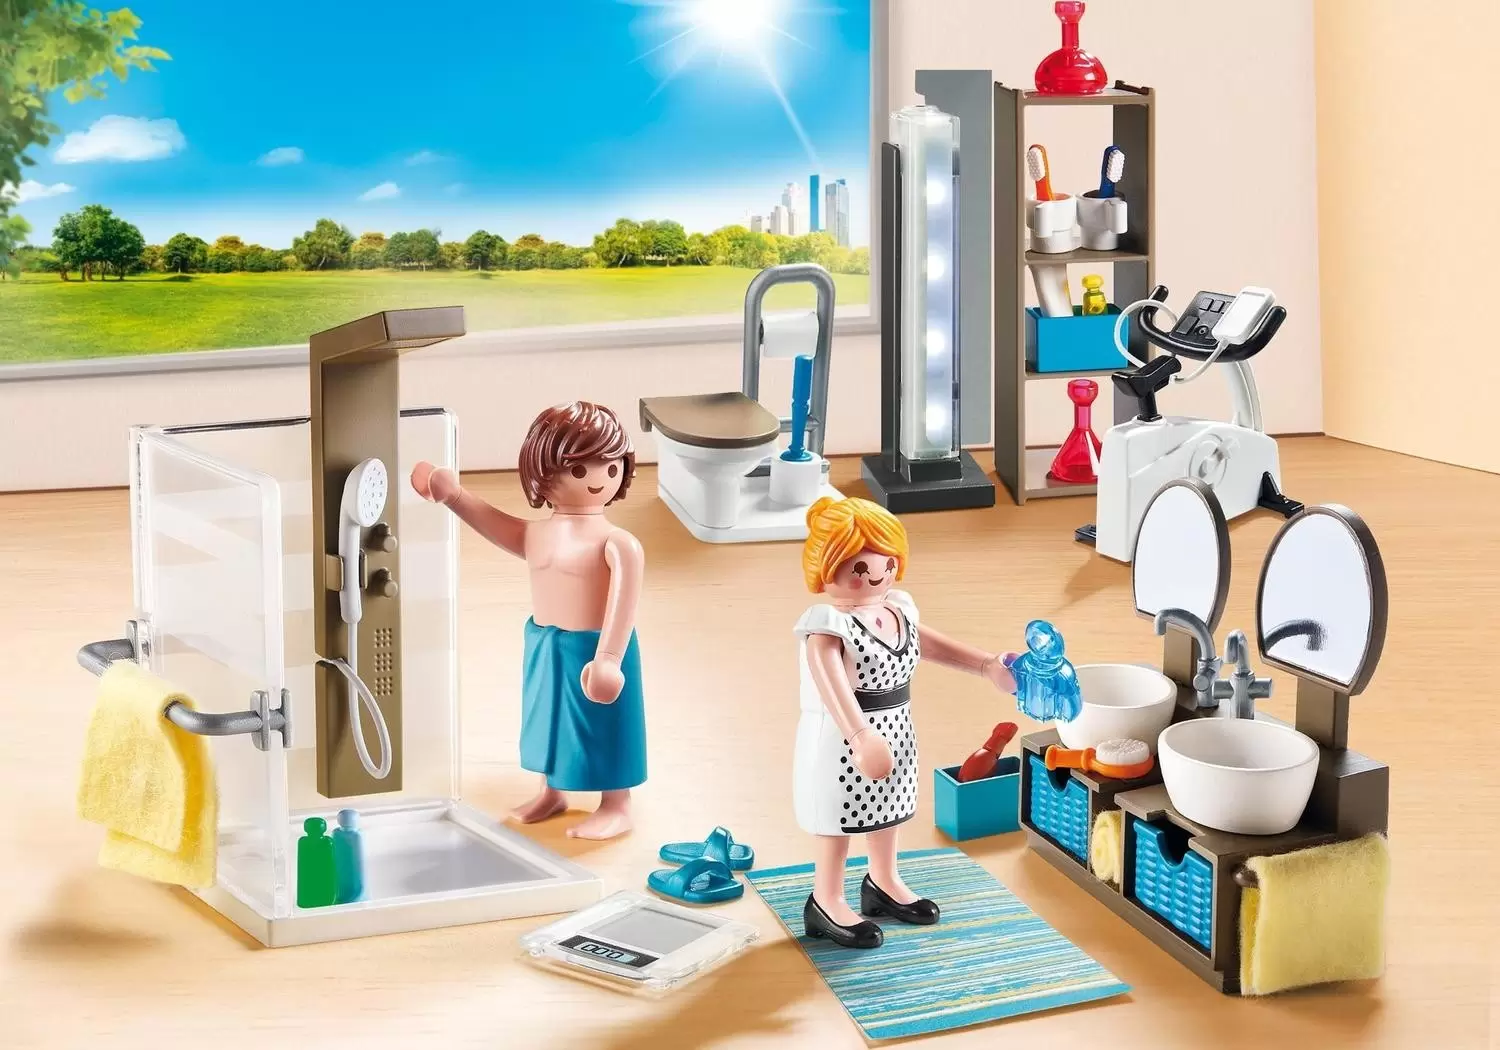 Playmobil Houses and Furniture - Bathroom